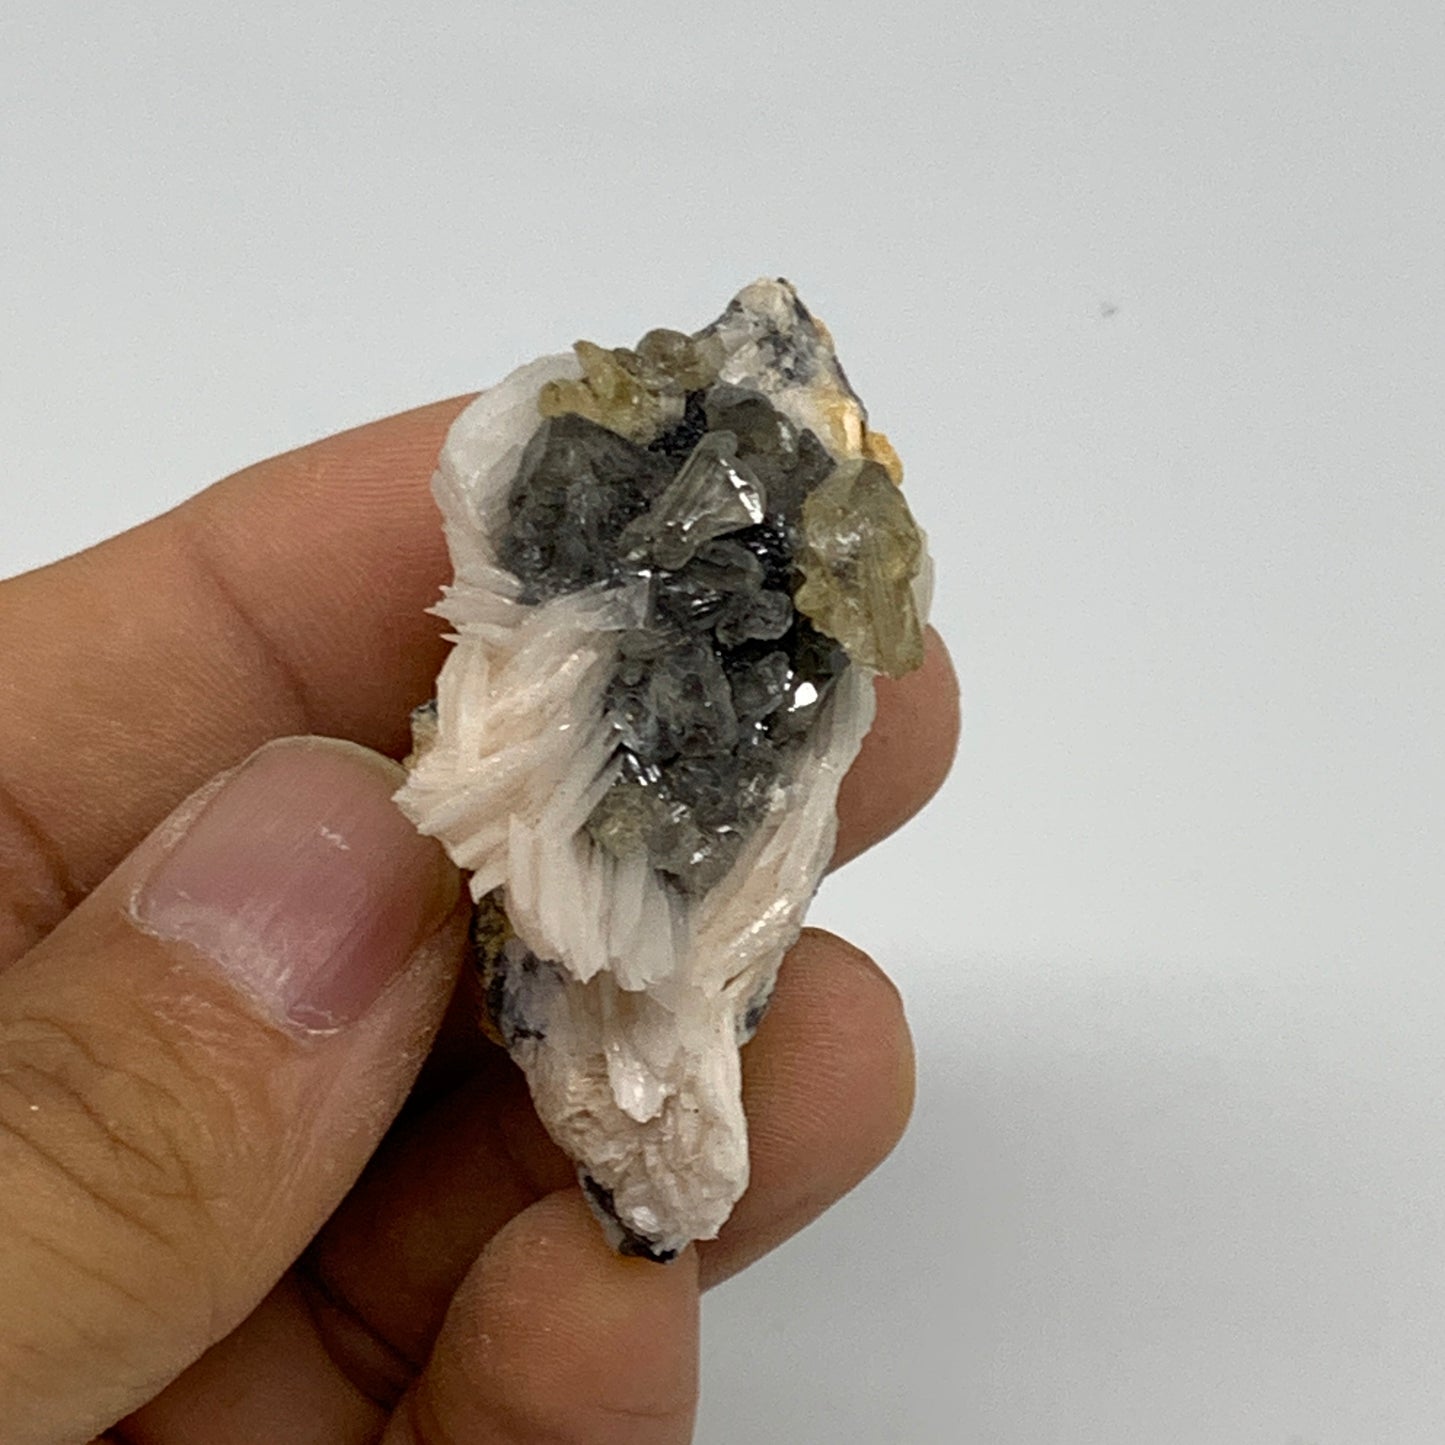 68.8g, 2"x1.5x0.8", Natural Golden Barite Mineral Specimen @Morocco, B33507